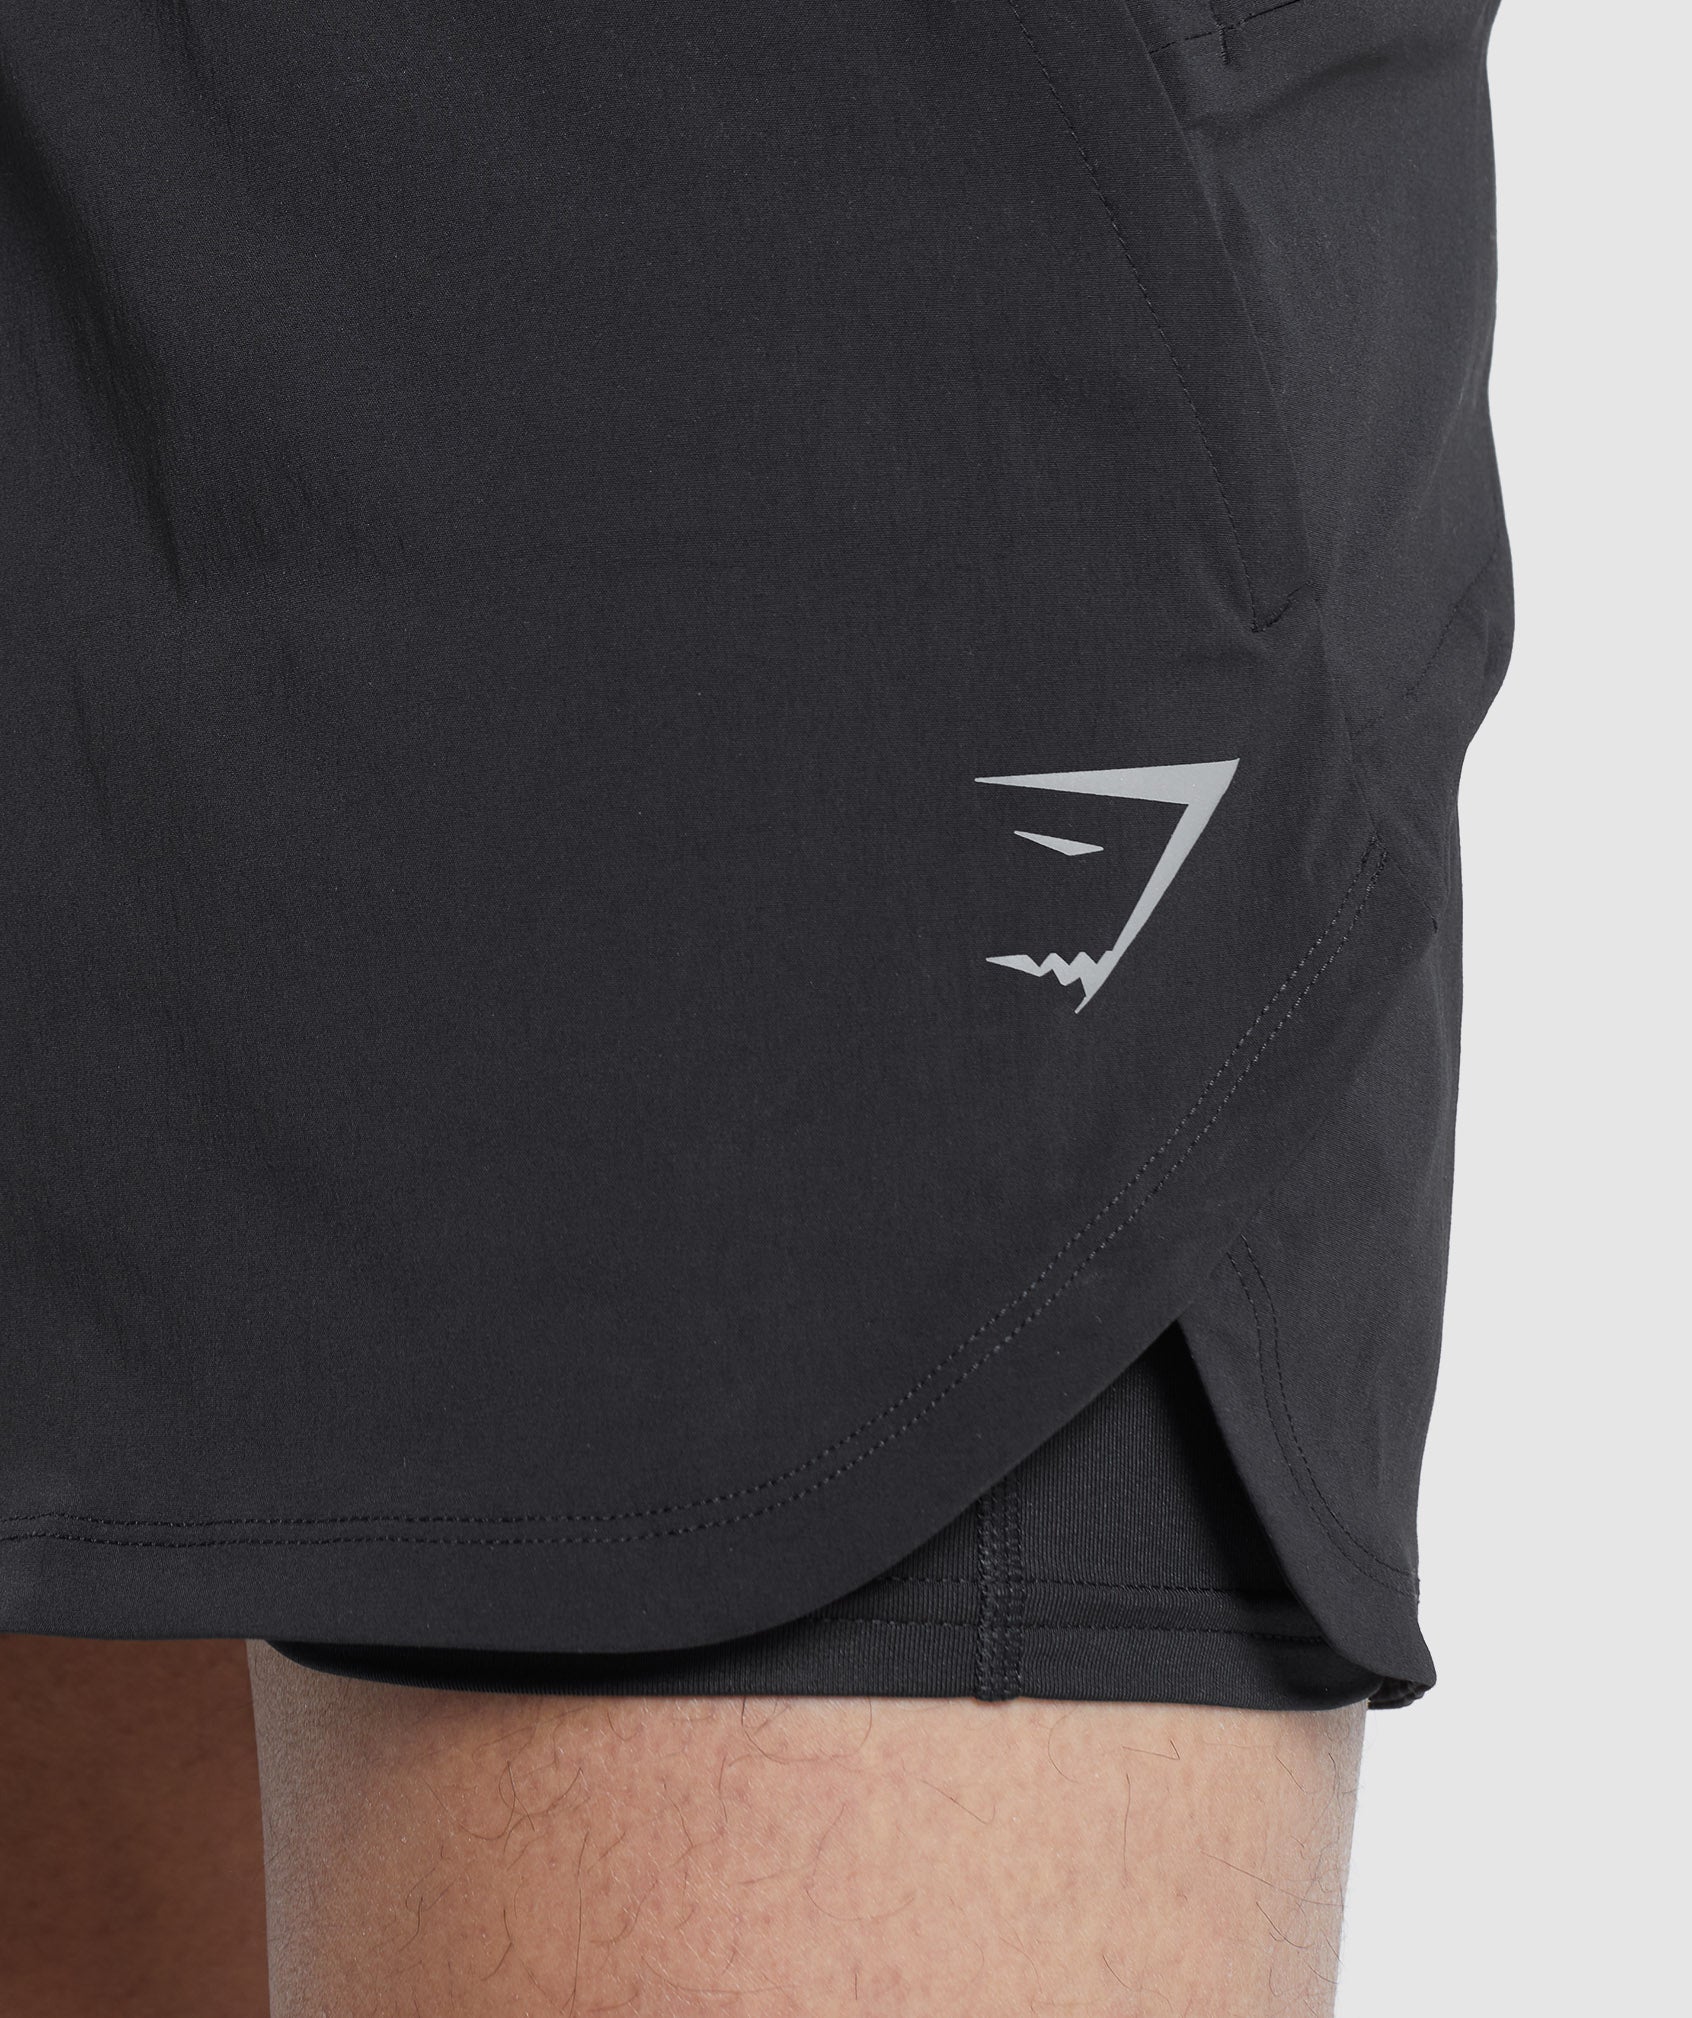 Gymshark Speed Evolve 5 Shorts - Black